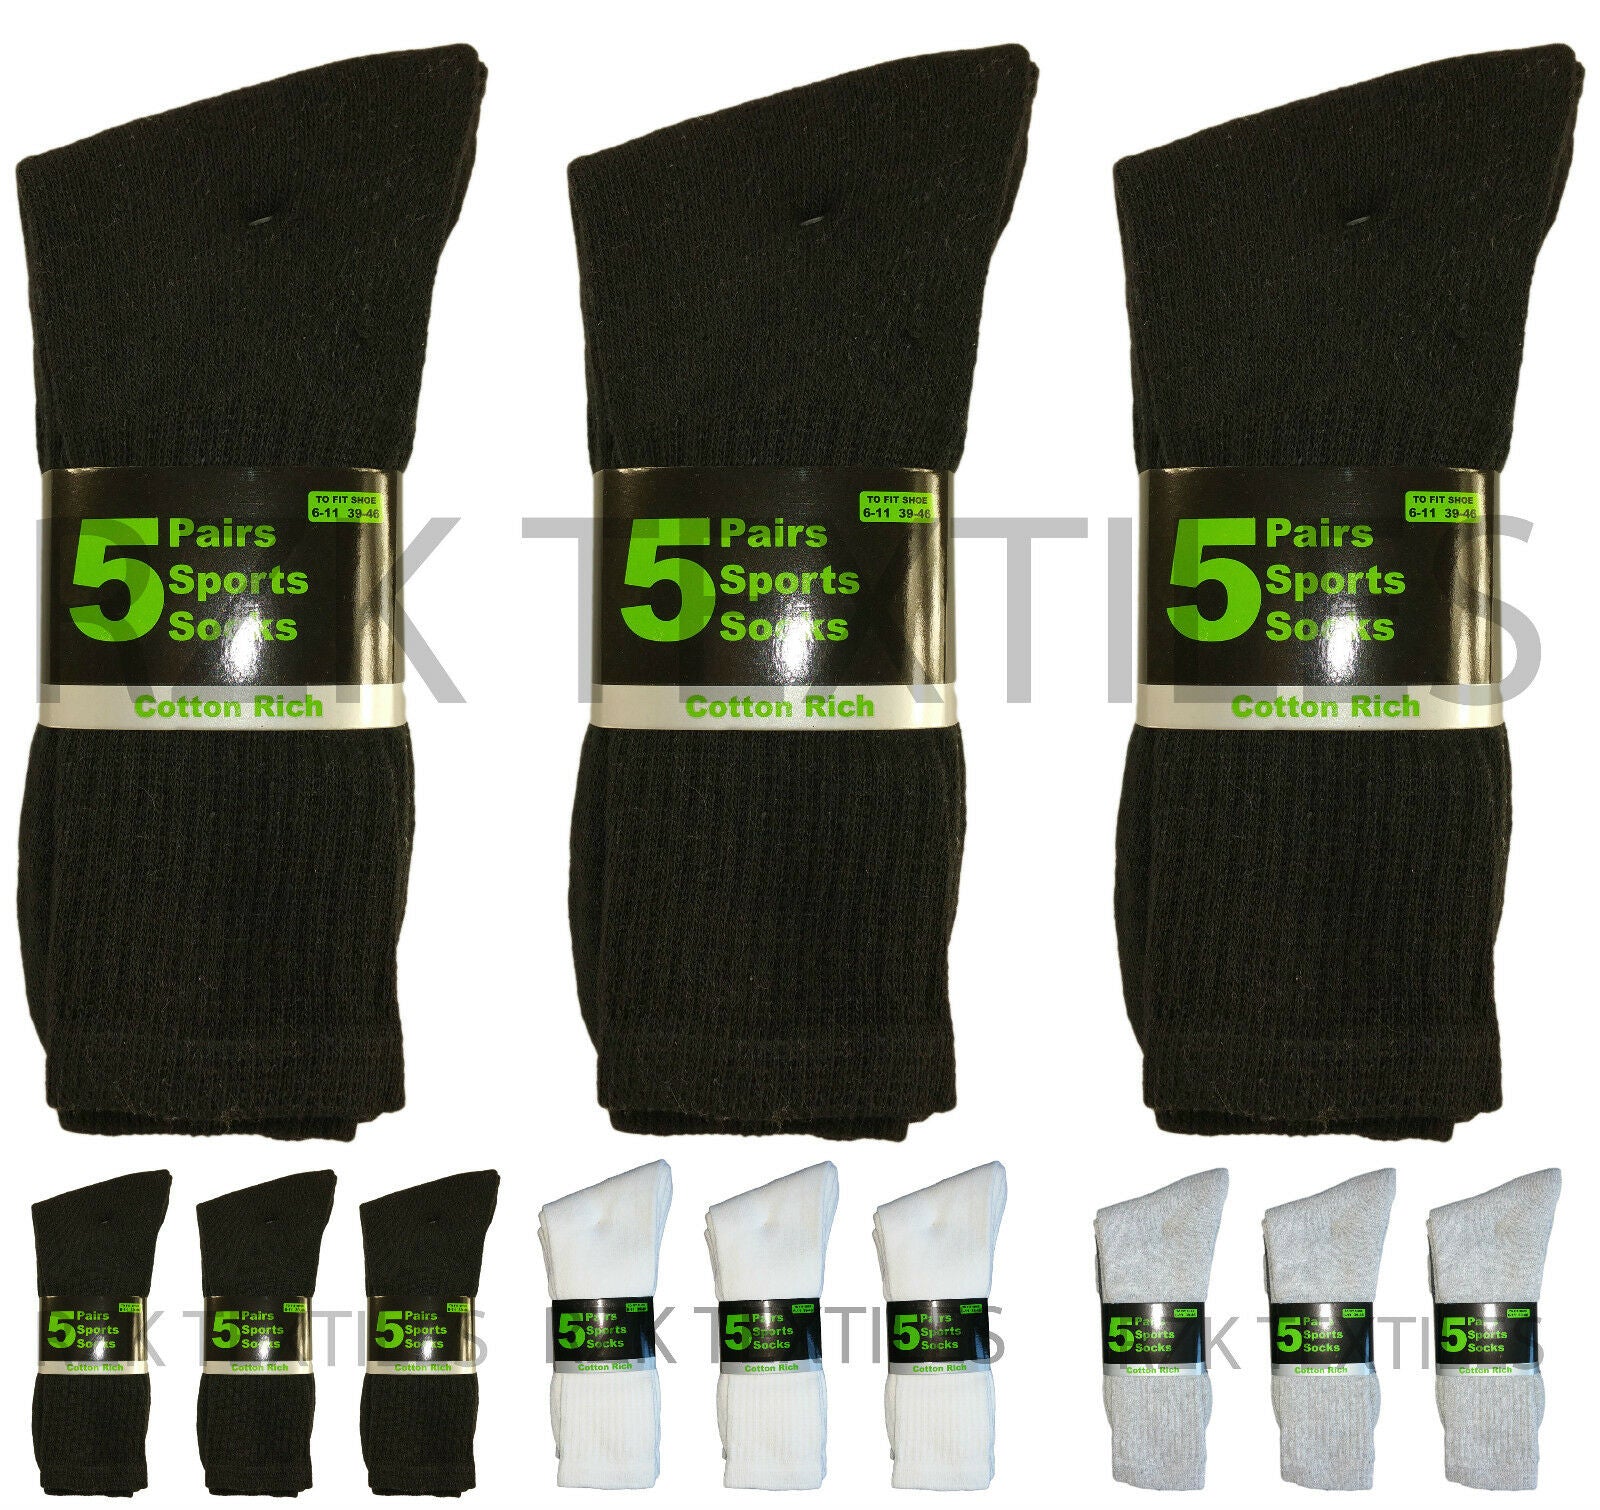 15 Pairs of Men'S Sport Socks, Black Cotton Rich Cushion Sole Socks, Size 6-11